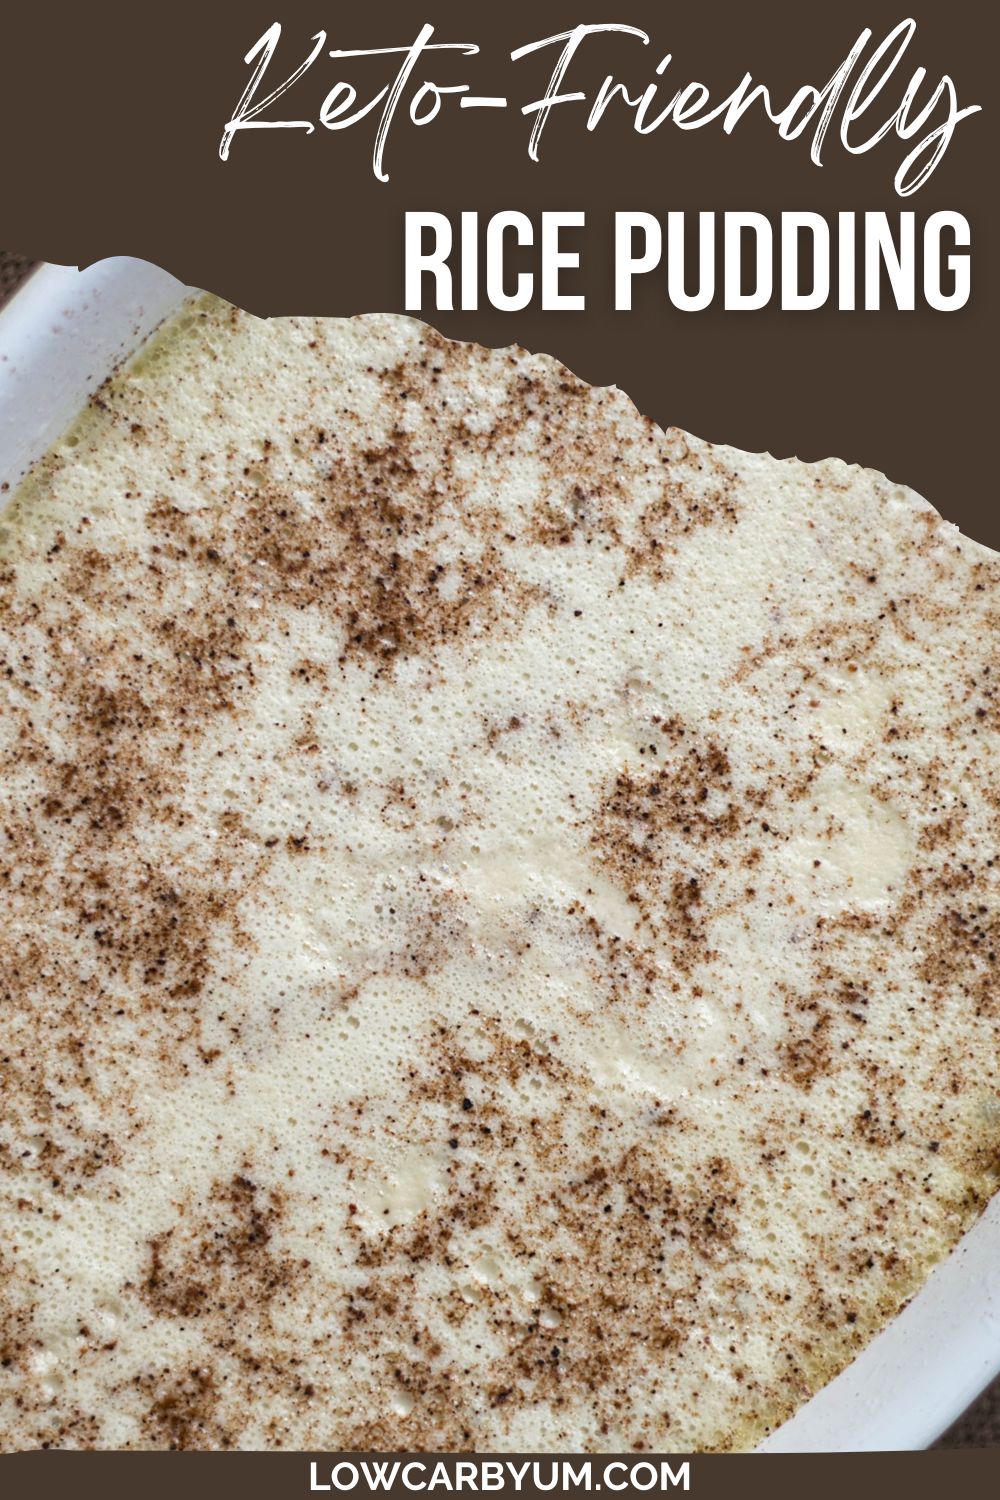 keto rice pudding pinterest image.